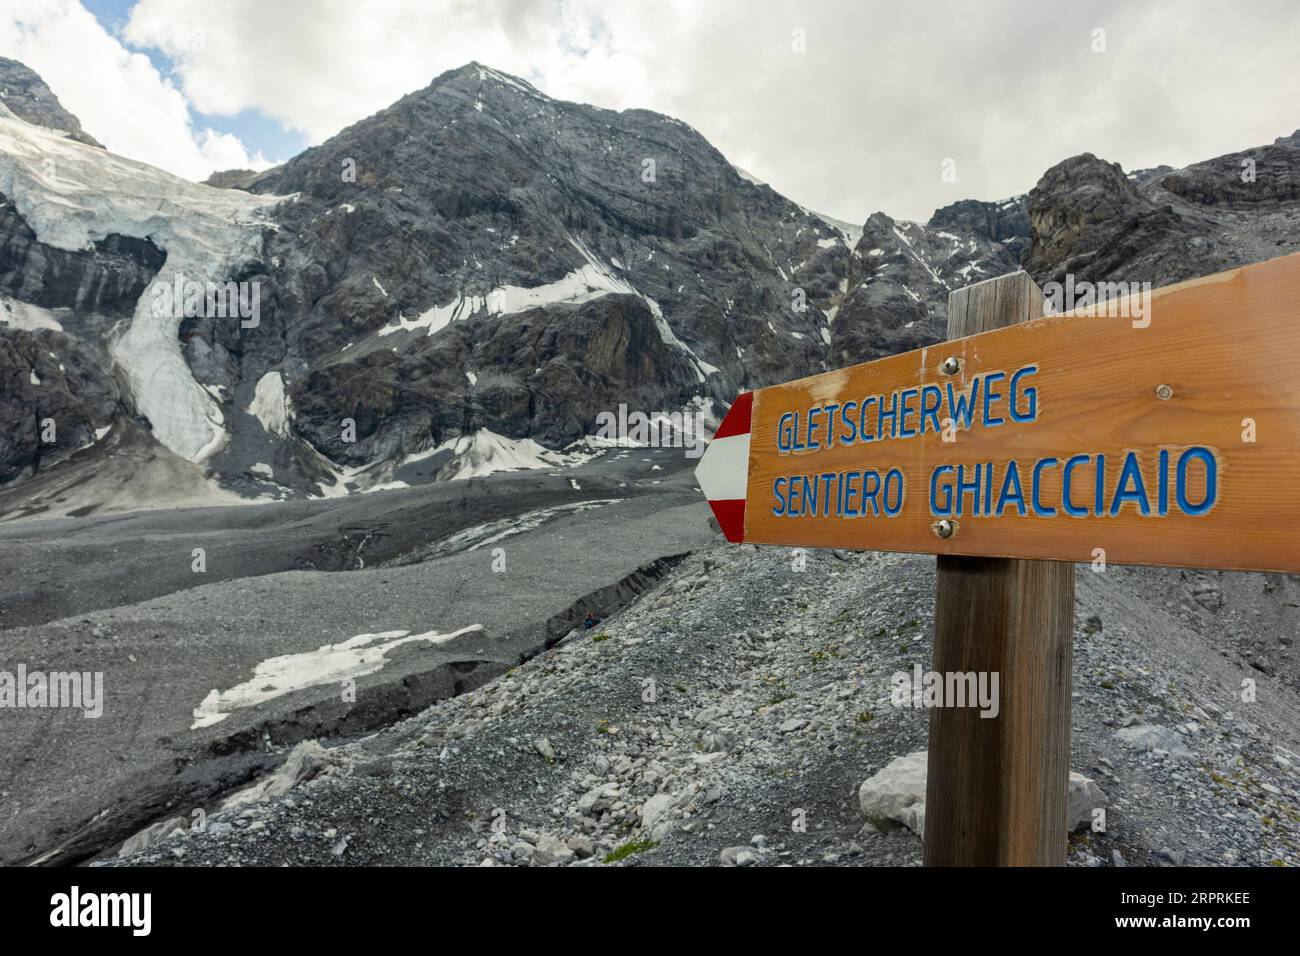 glacier on koenigsspitze mountain in the italian alps Stock Photo